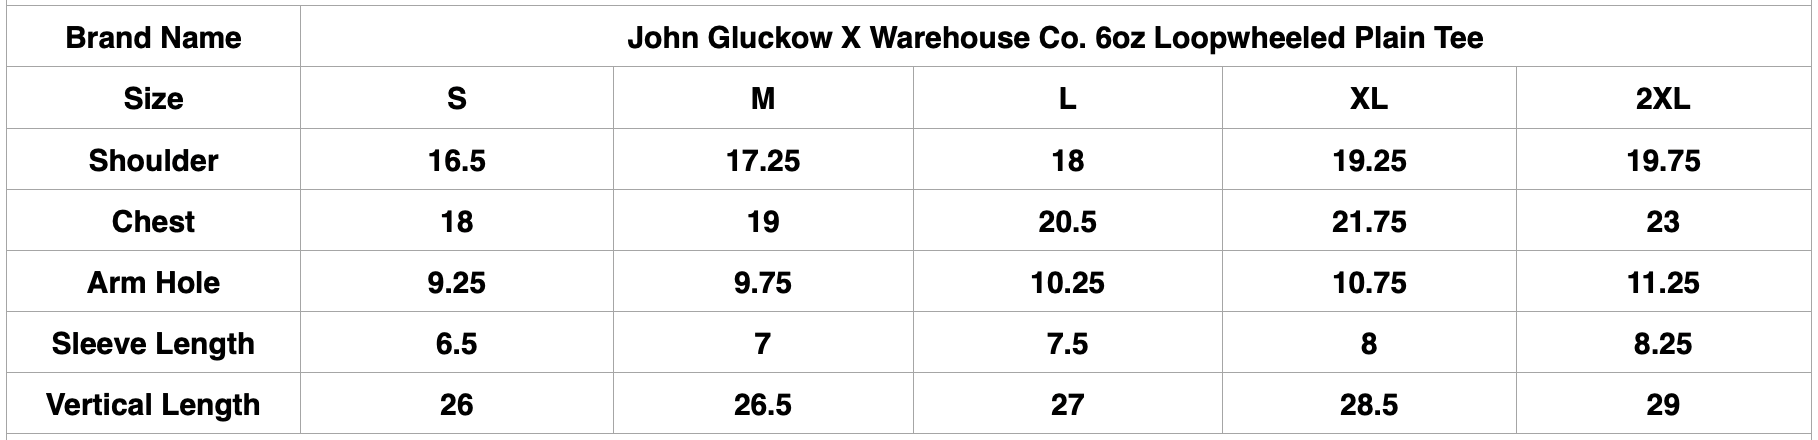 John Gluckow X Warehouse Co. 6oz Loopwheeled Plain Tee (Grey)